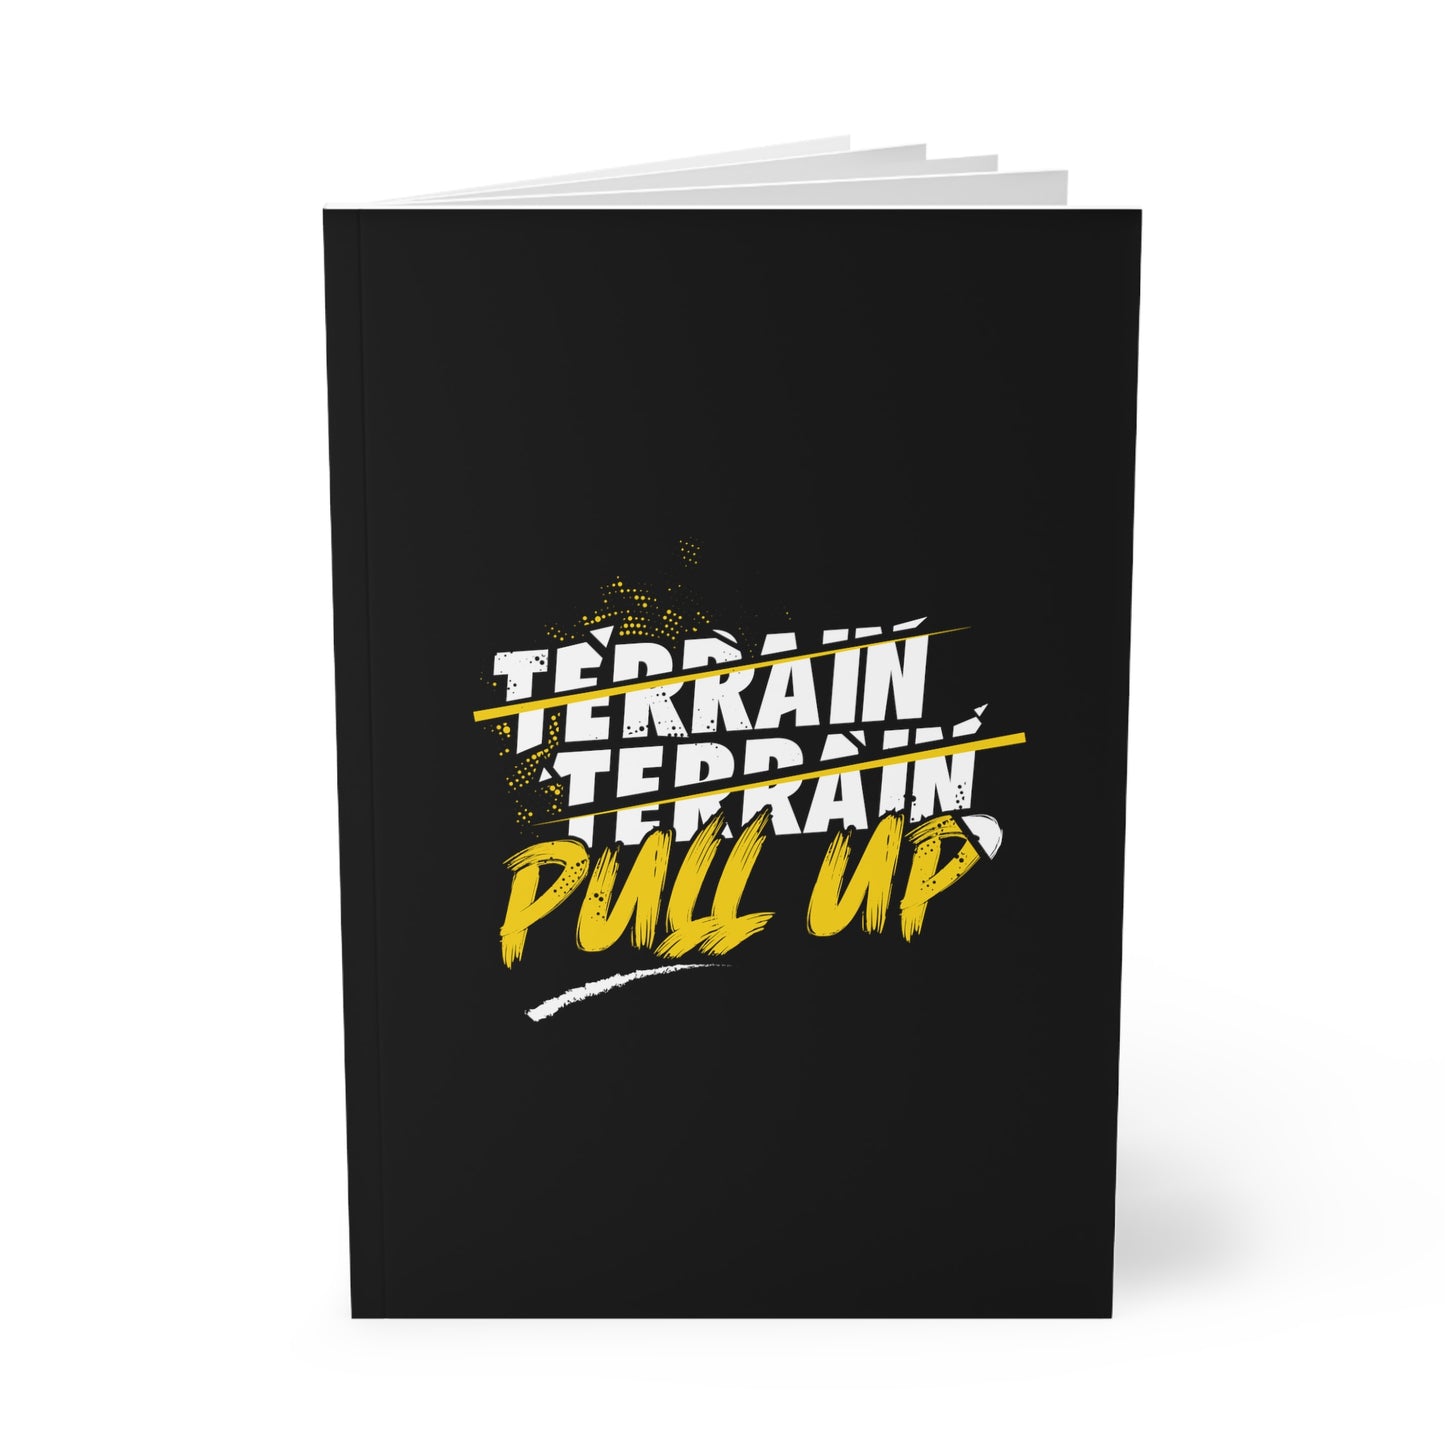 A5 Softcover Notebook - "Terrain, Terrain, Pull Up!"